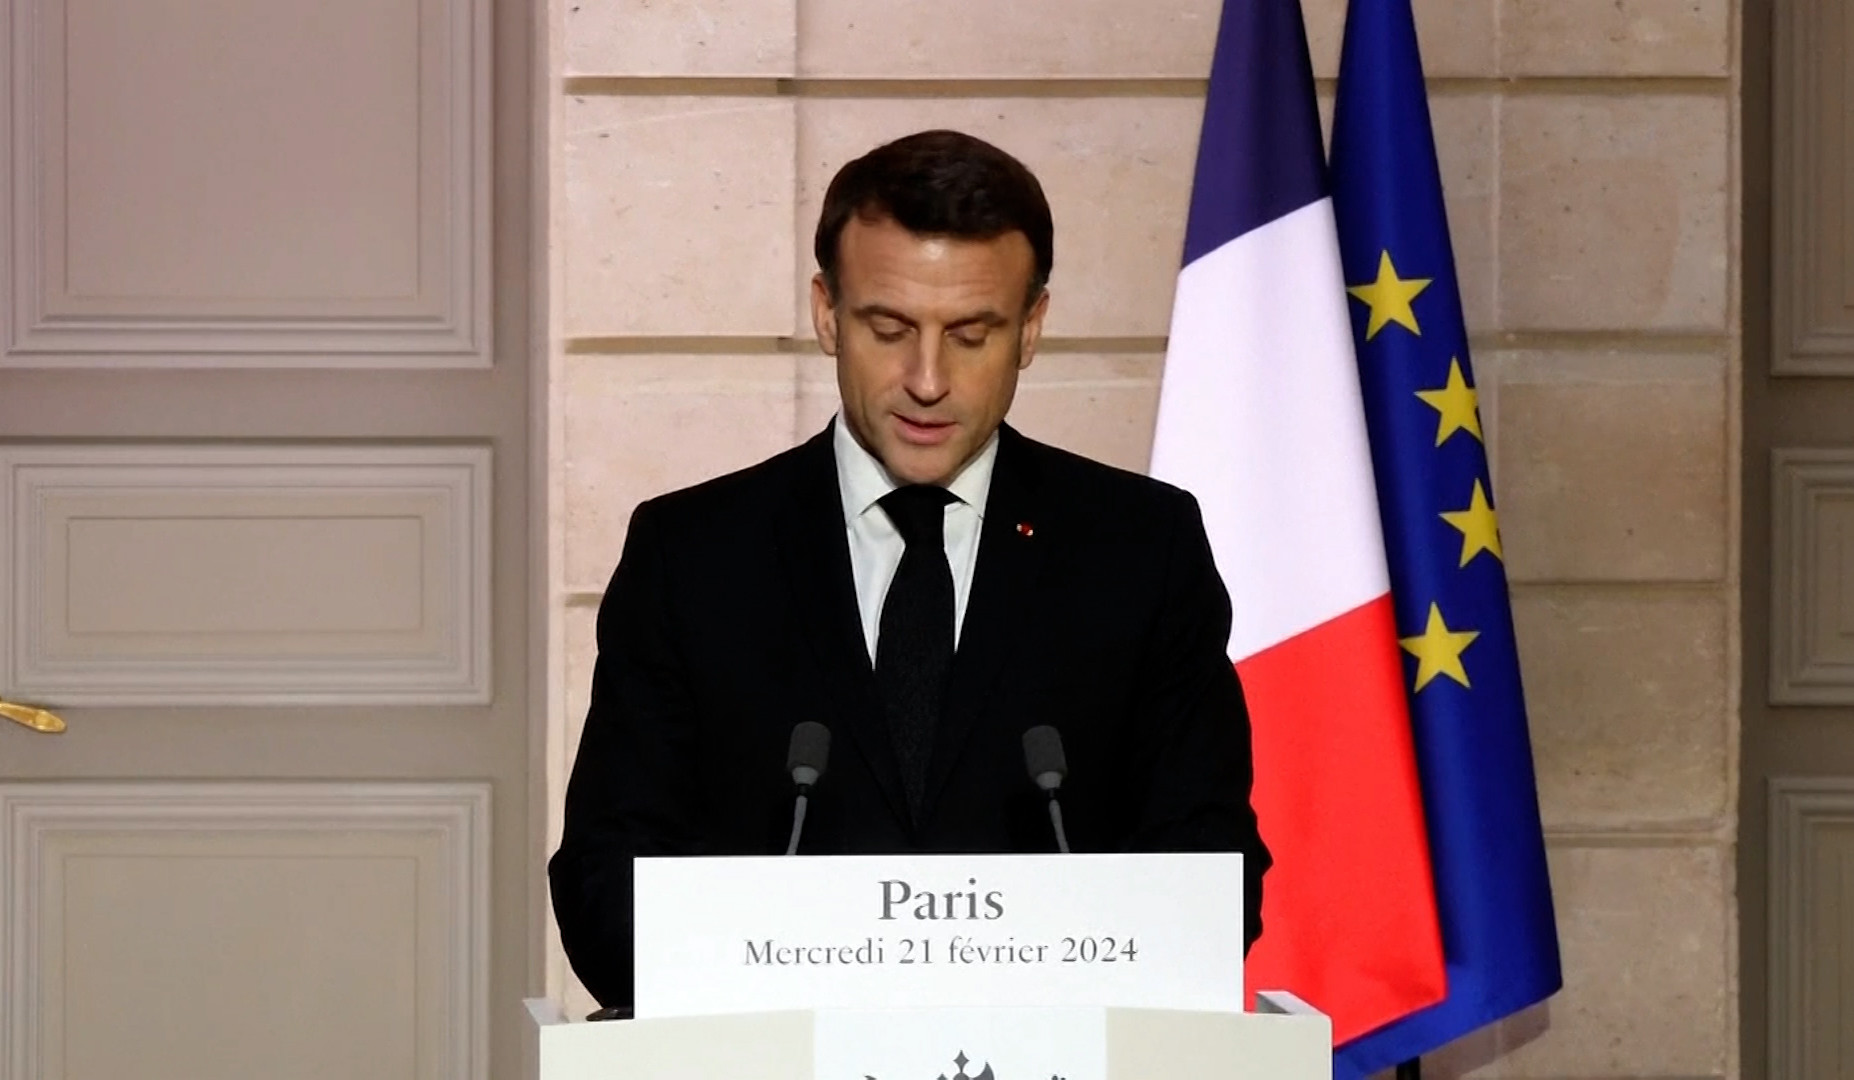 France expresses regret for Azerbaijan's disproportionate retaliatory strike: Macron